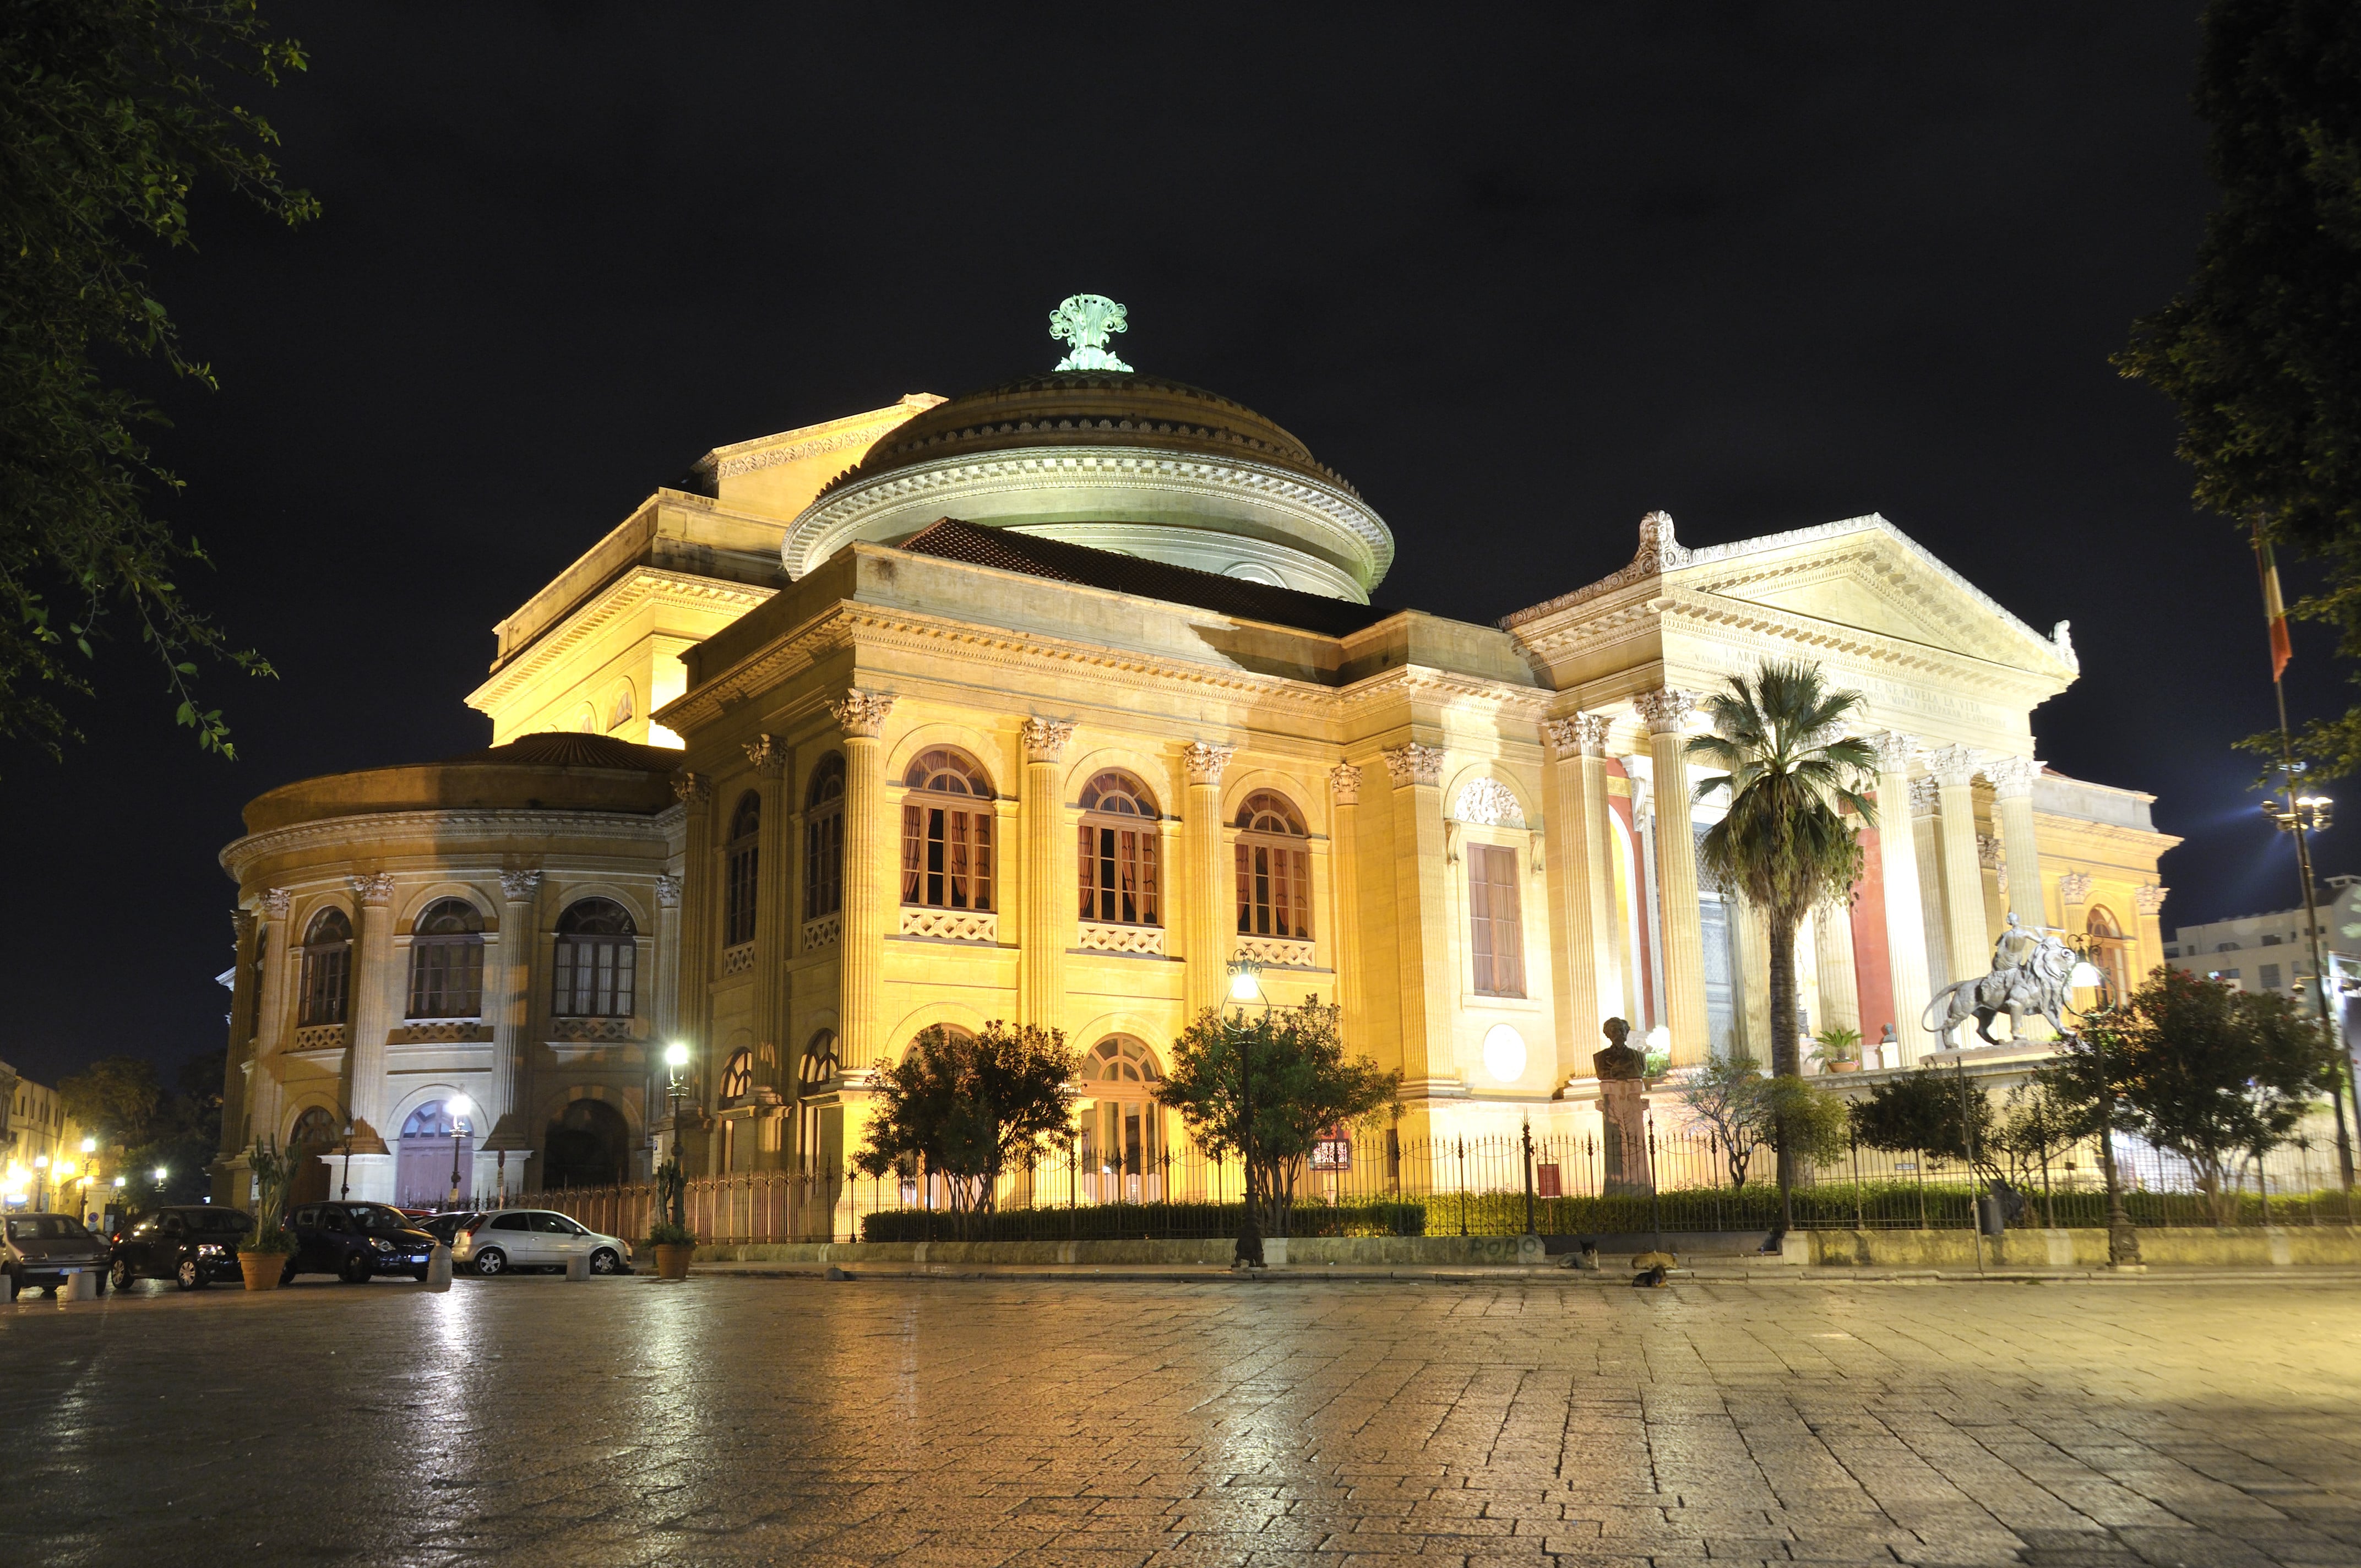 Teatro Massimo - Palermo Italy